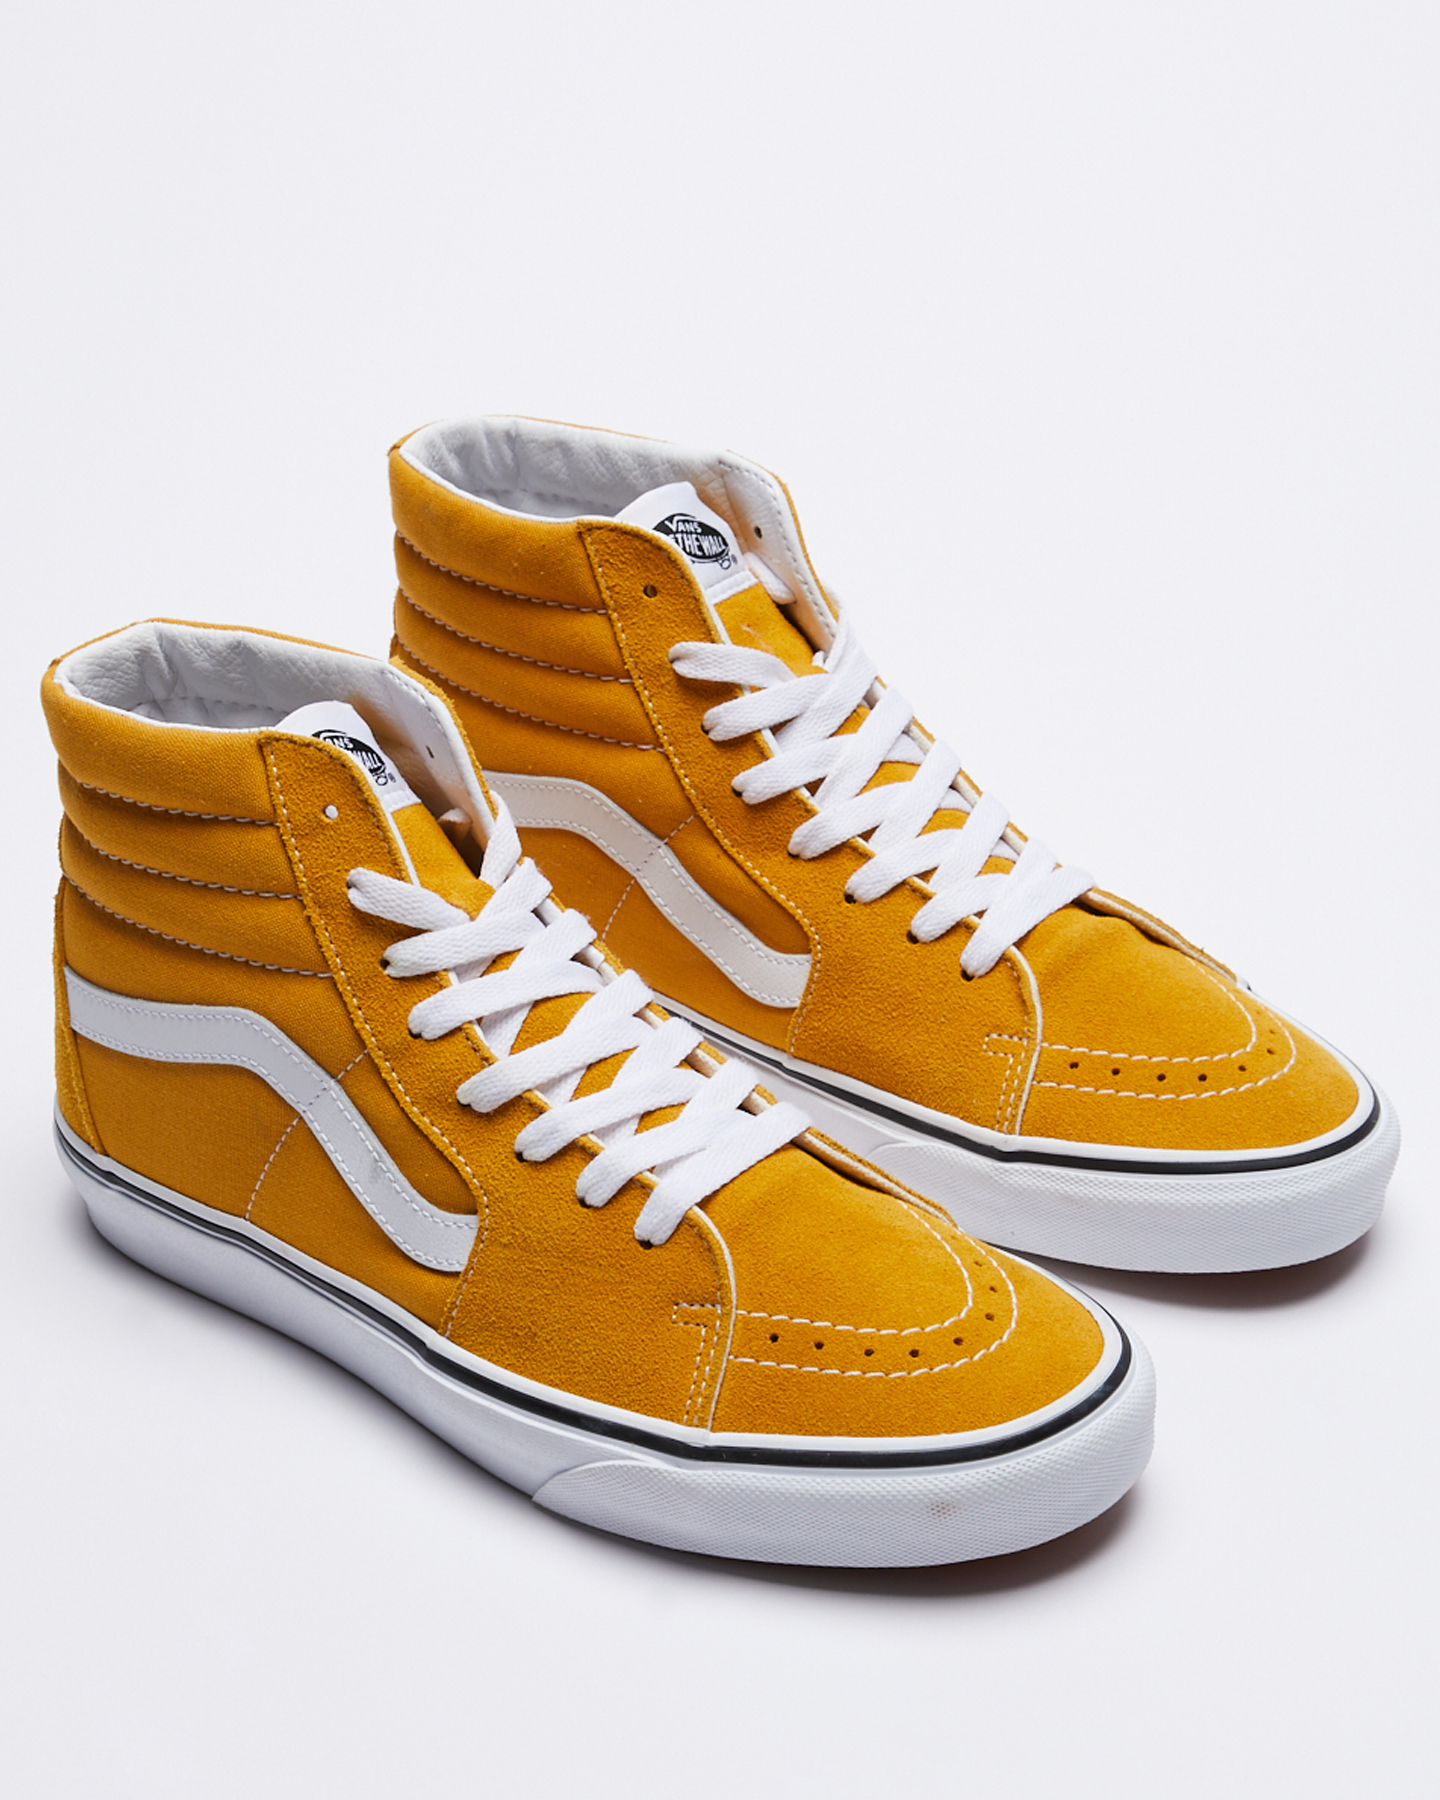 Vans Sk8-Hi Color Theory Shoe - Golden Yellow | SurfStitch